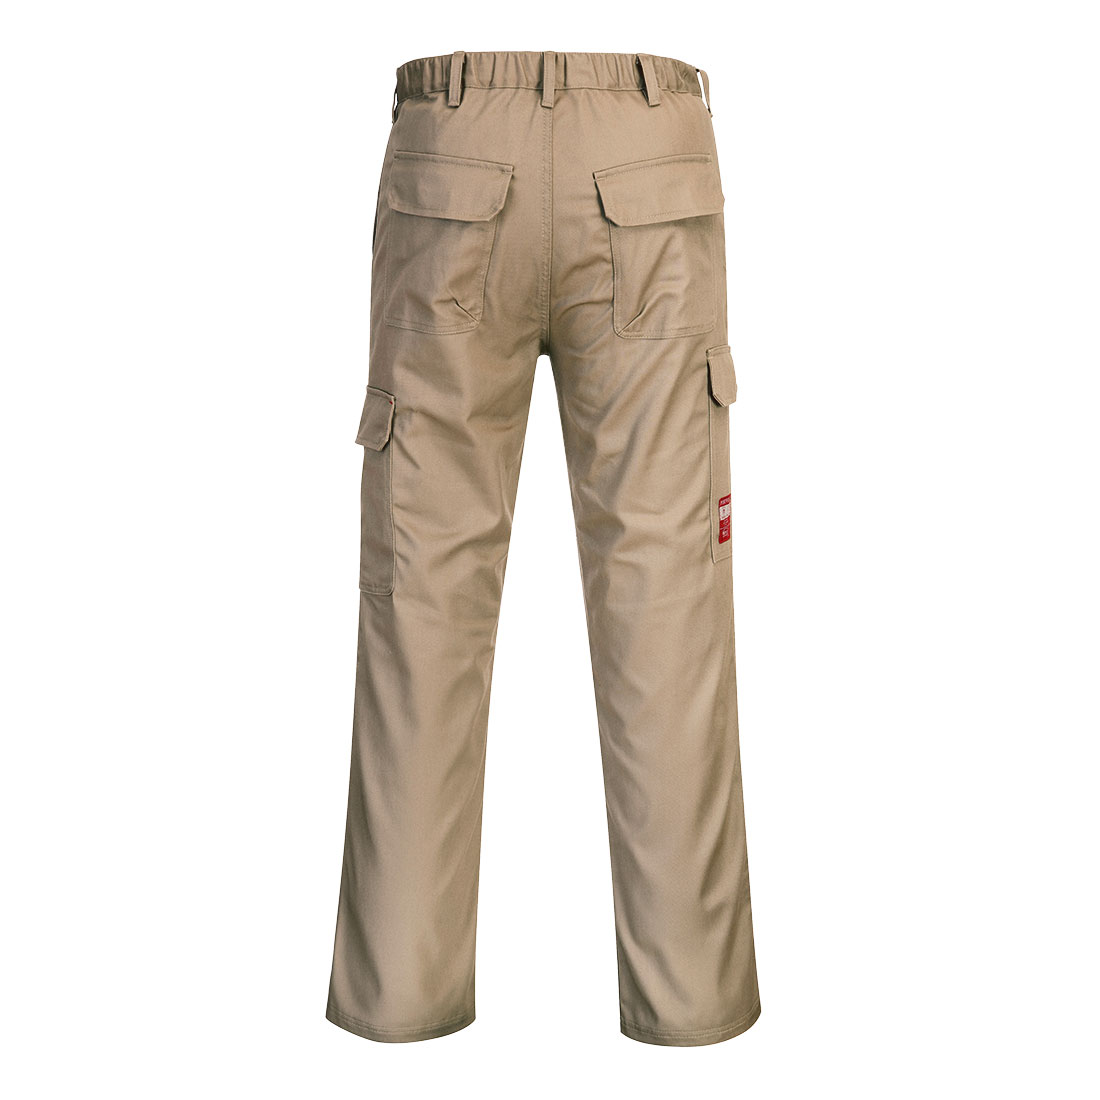 BZ31 Portwest® Bizweld® Flame-Resistant ARC2 Cargo Pants - Khaki